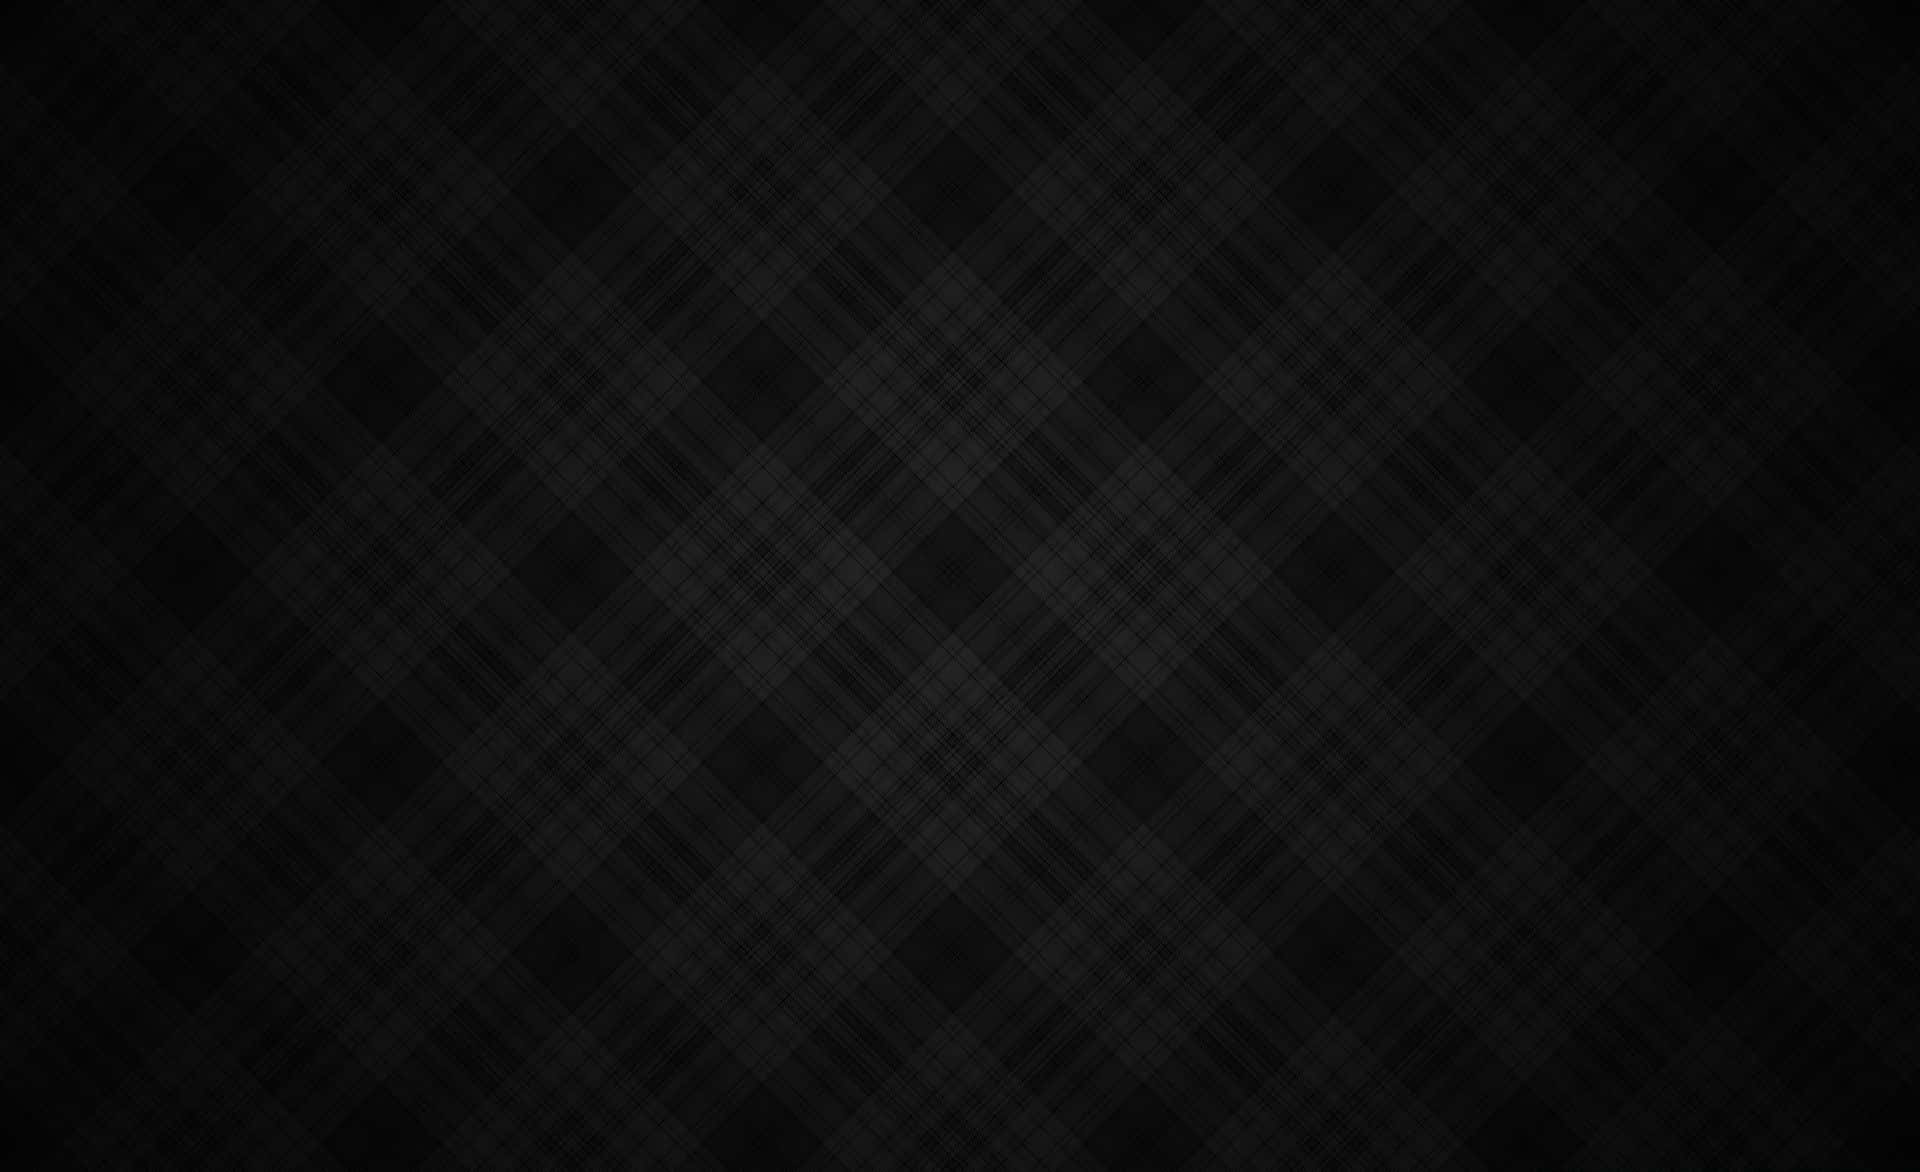 Black Tartan Plaid Texture Background